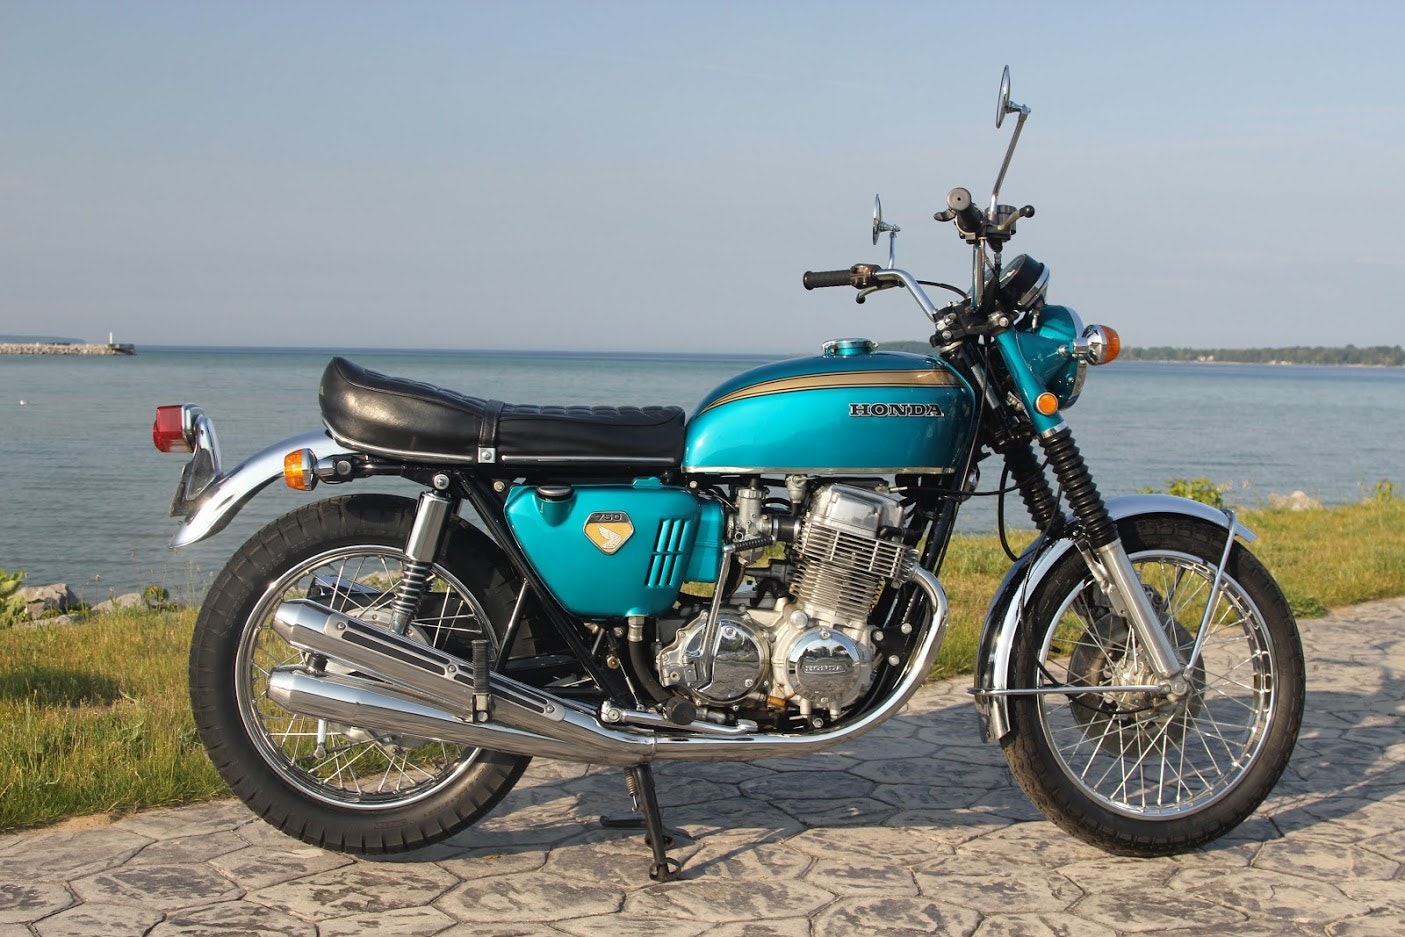 1969 Honda CB750 Four Sandcast Motorcycle courtesy of James Hewitt